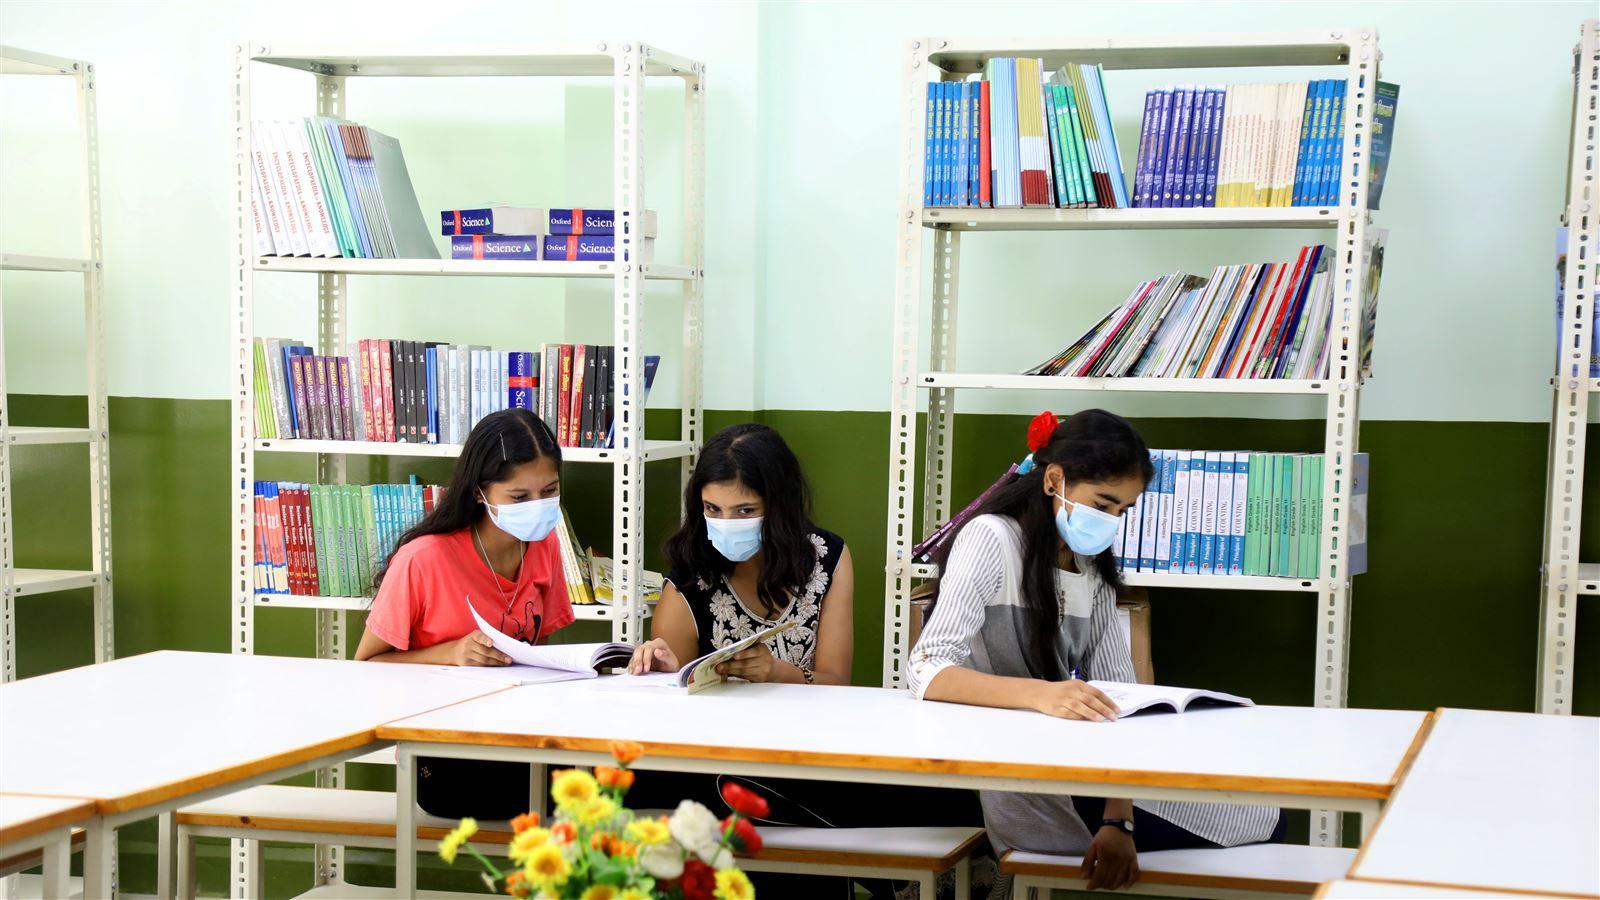 Students at the Adarsha Secondary School in Bhaktapur enjoy reading new books.